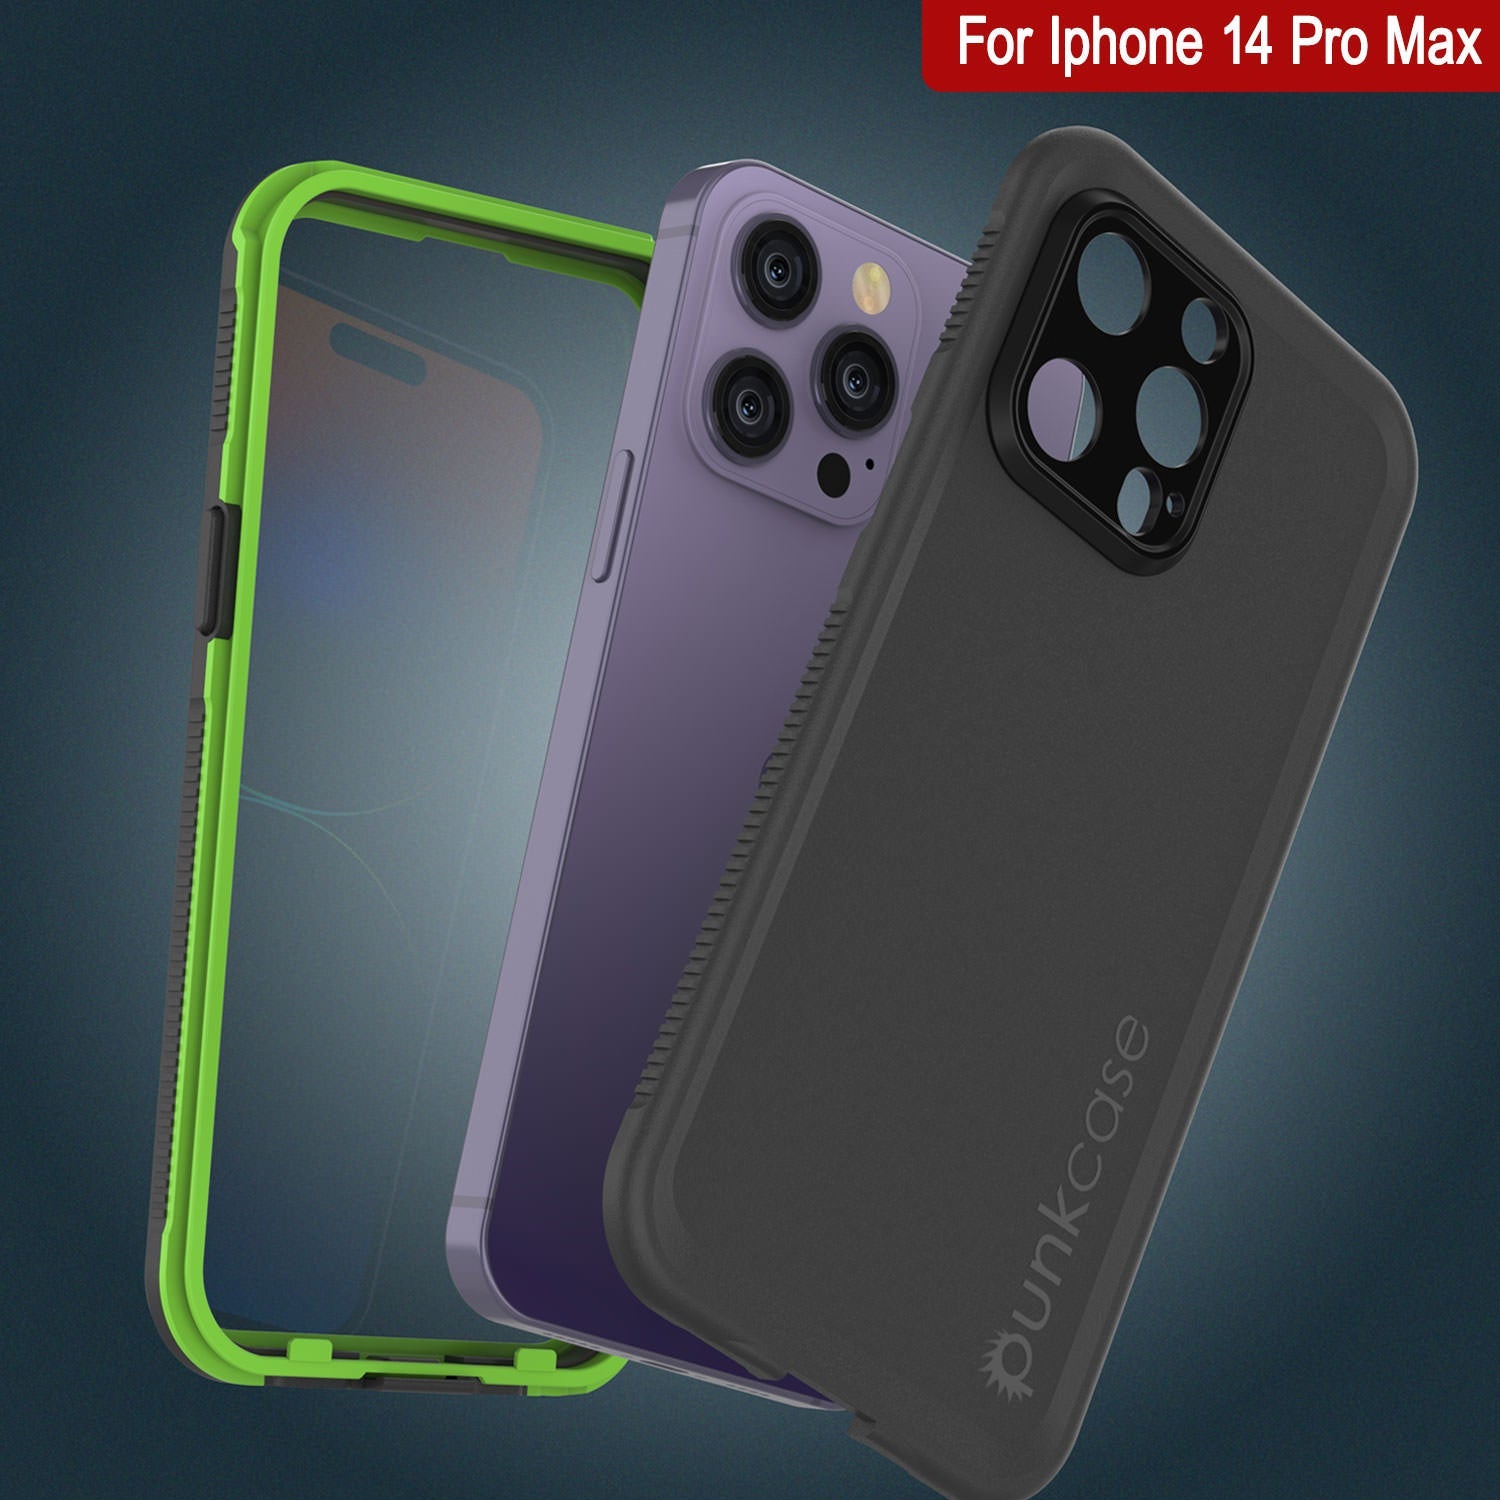 Punkcase iPhone 14 Pro Max Waterproof Case [Aqua Series] Armor Cover [Black-Green]